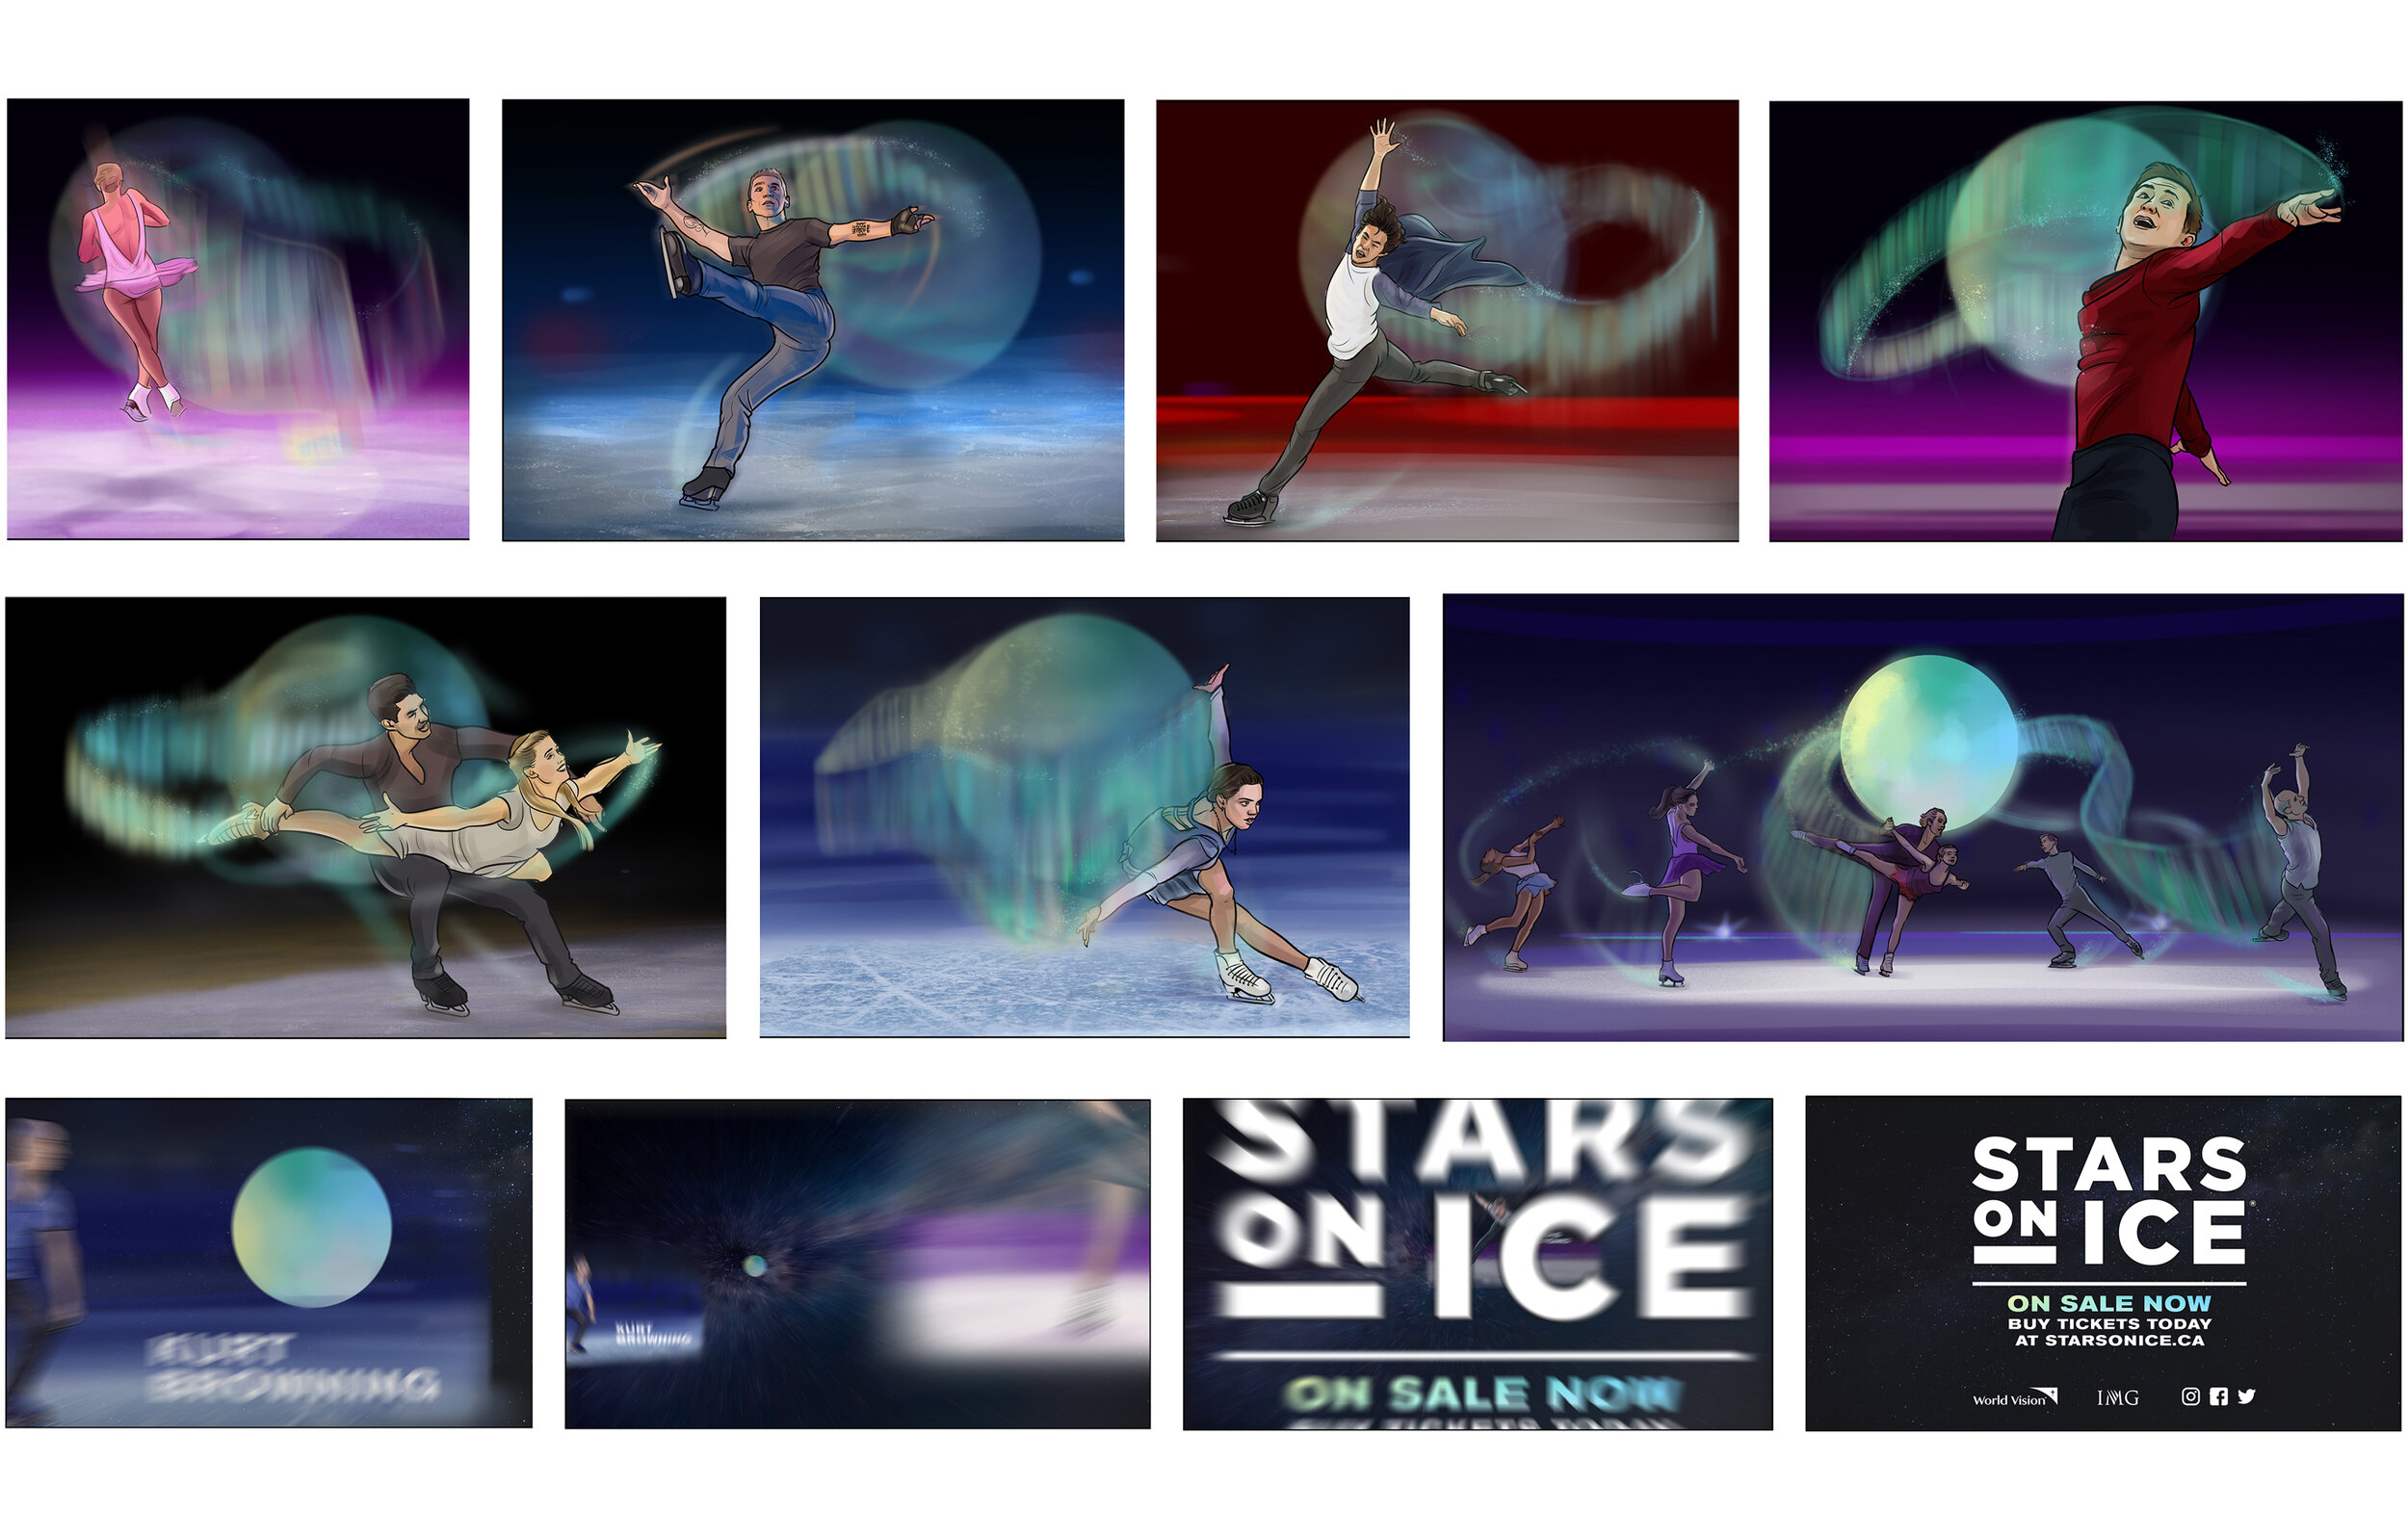 StarsOnIce-SBs2.jpg